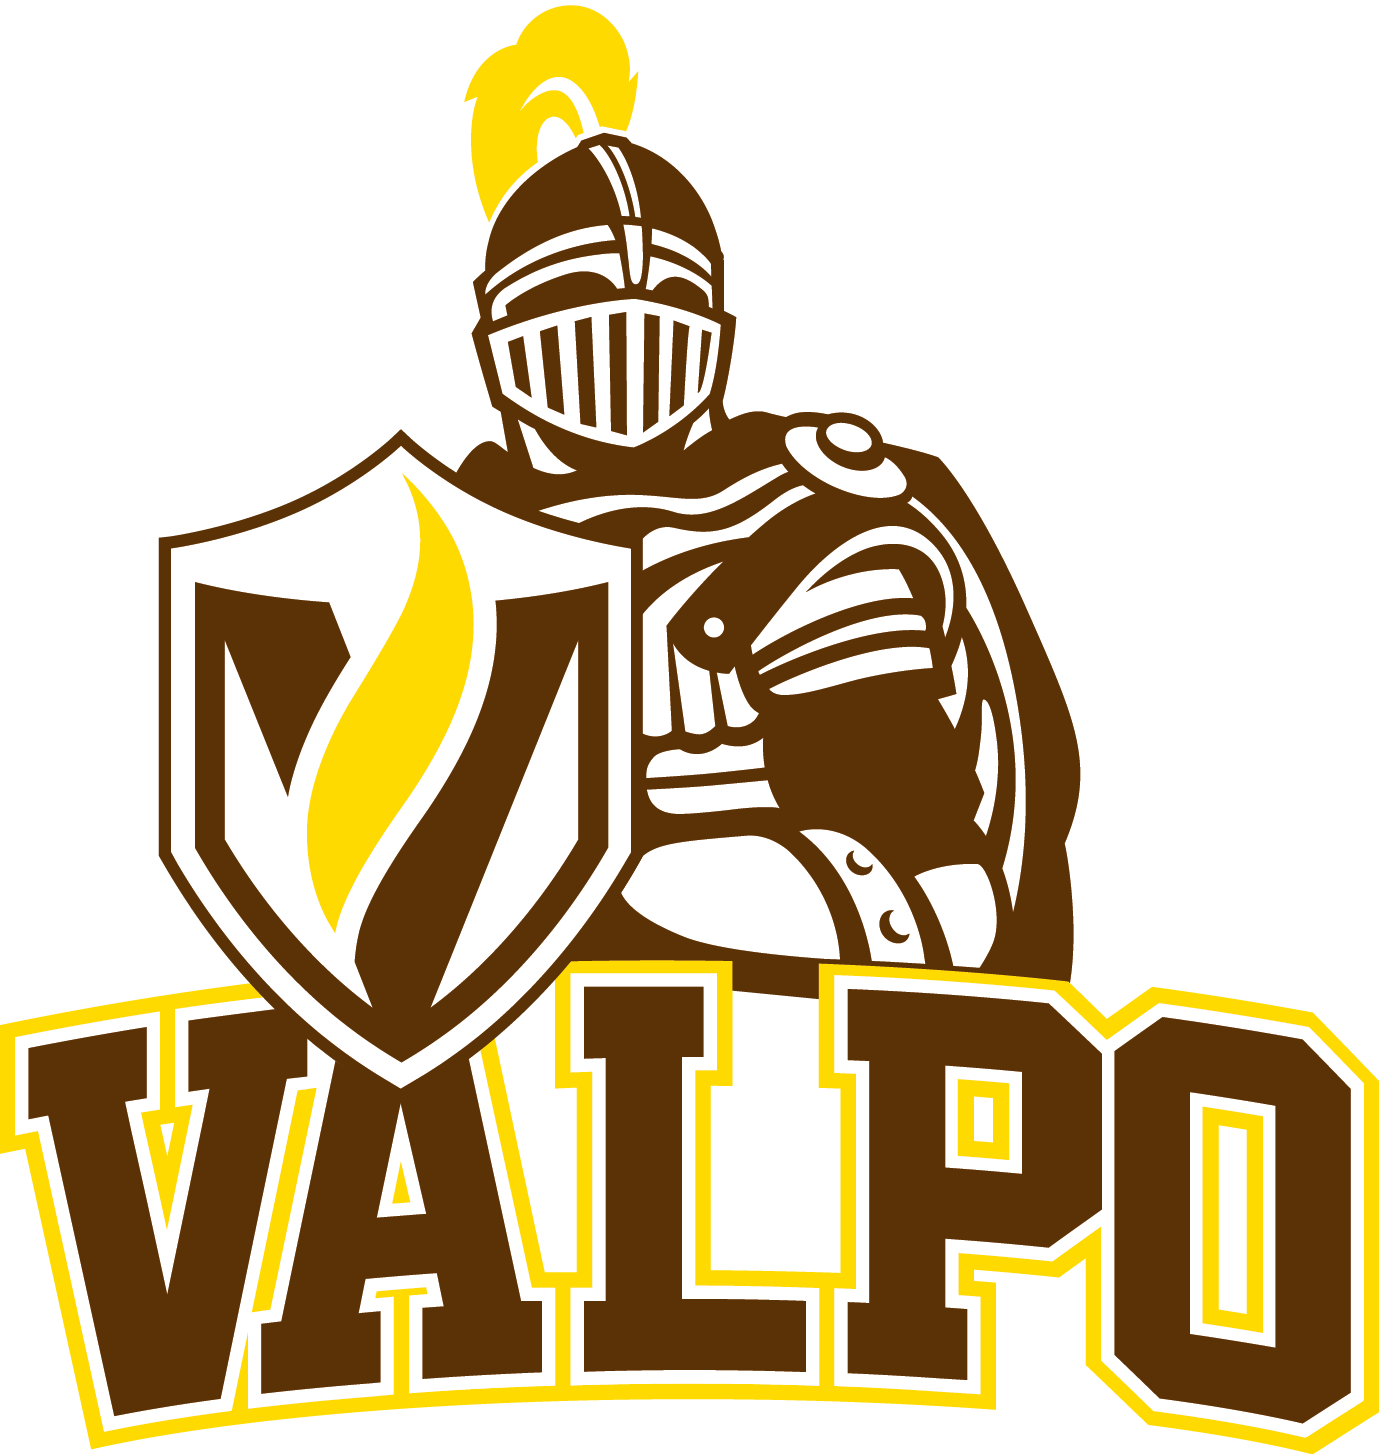 Valparaiso Logo - Download Logos | Valparaiso University Brand